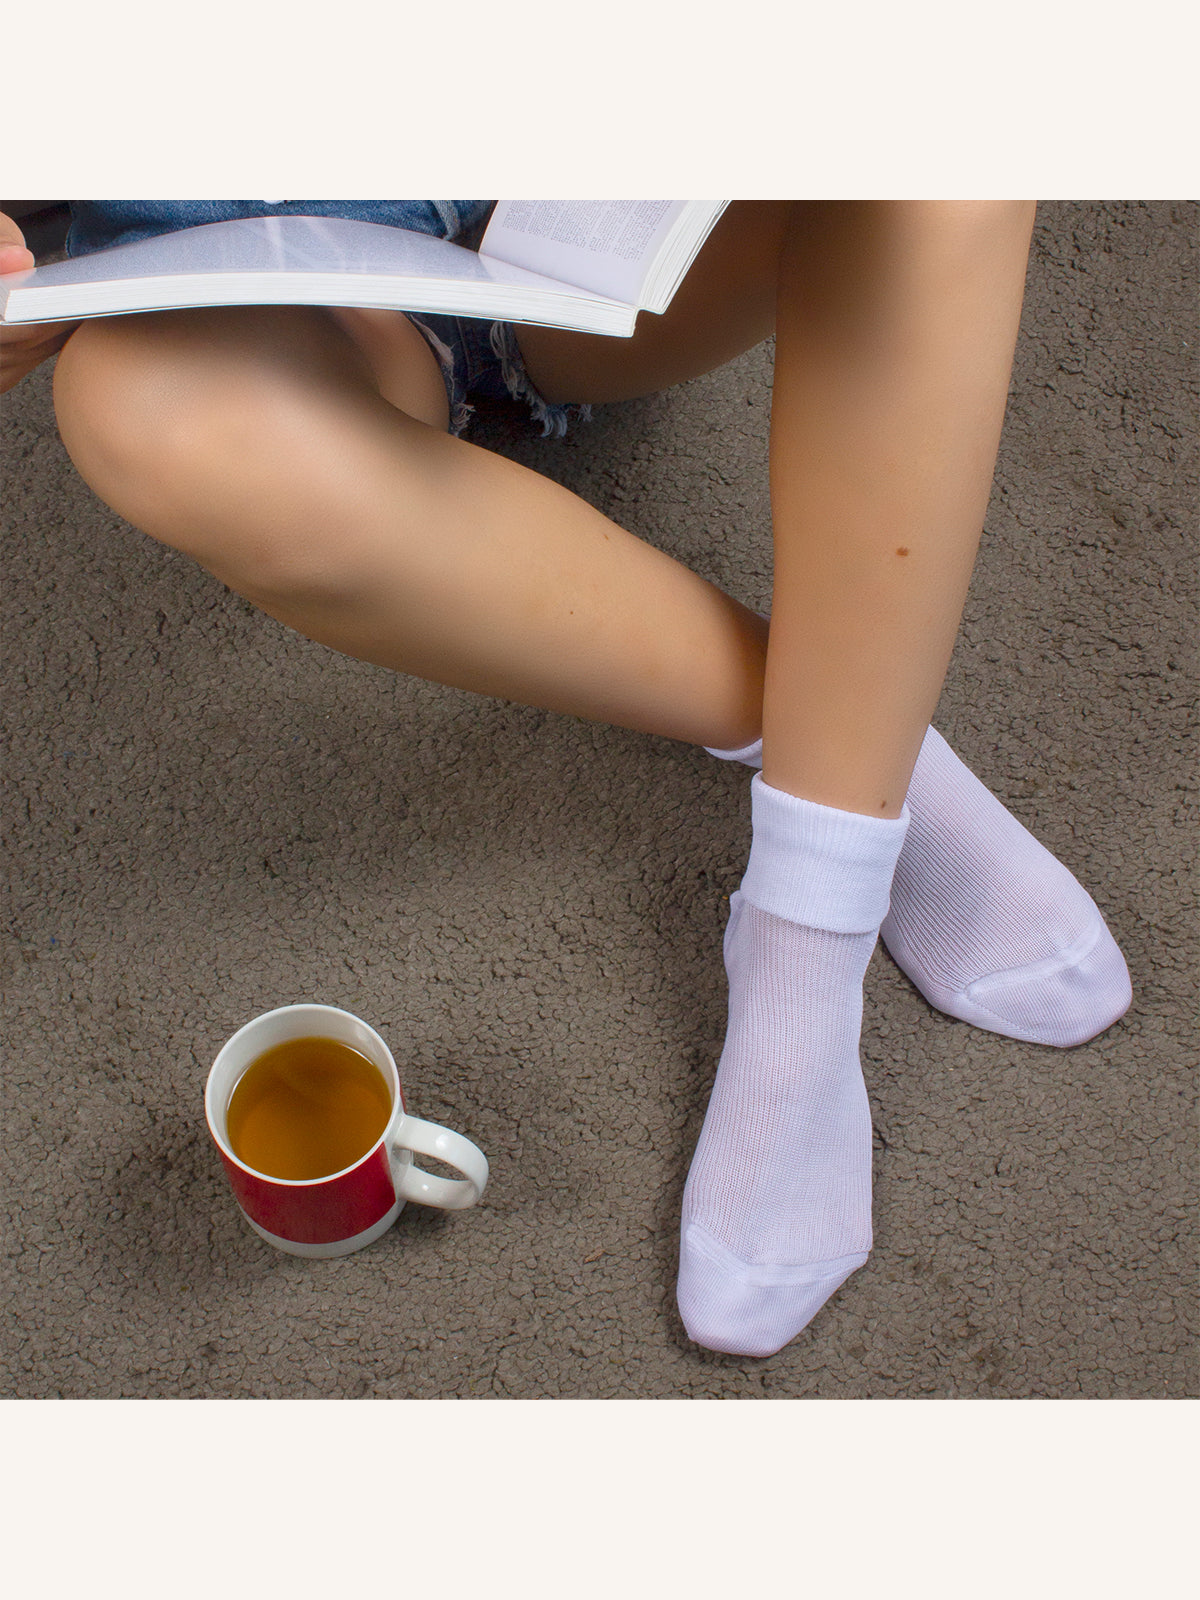 Short Cotton Socks for Women | Plain Color | Pack of 6 Pairs | 061 D Sanitary Stocking